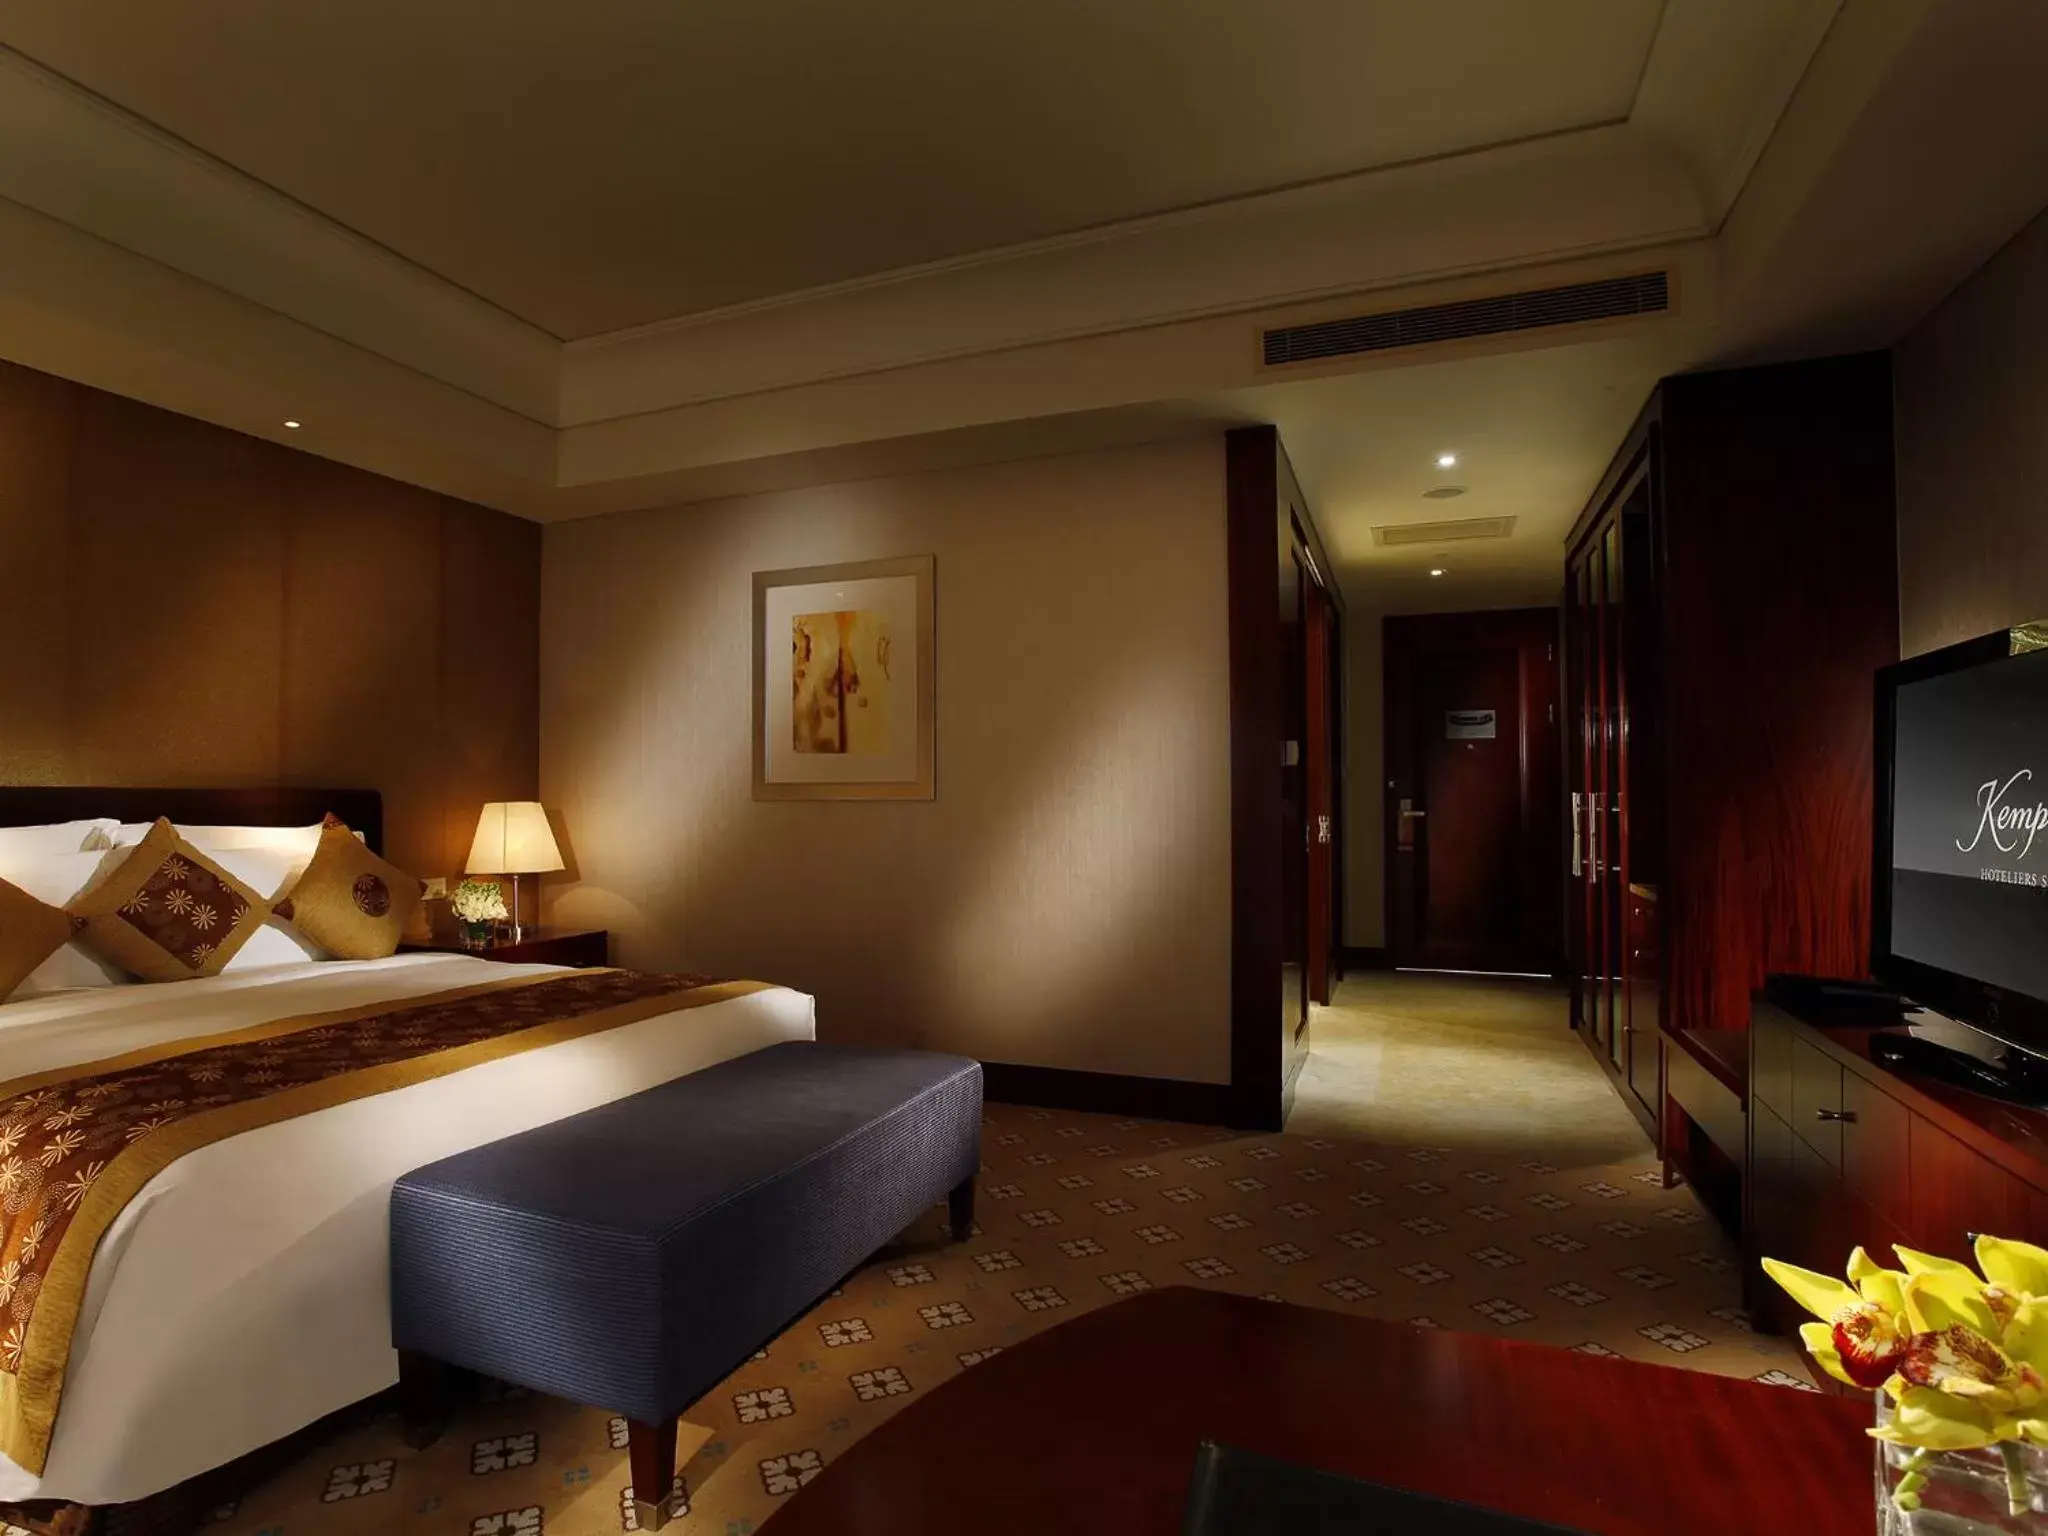 Photo of the whole room in Kempinski Hotel Suzhou